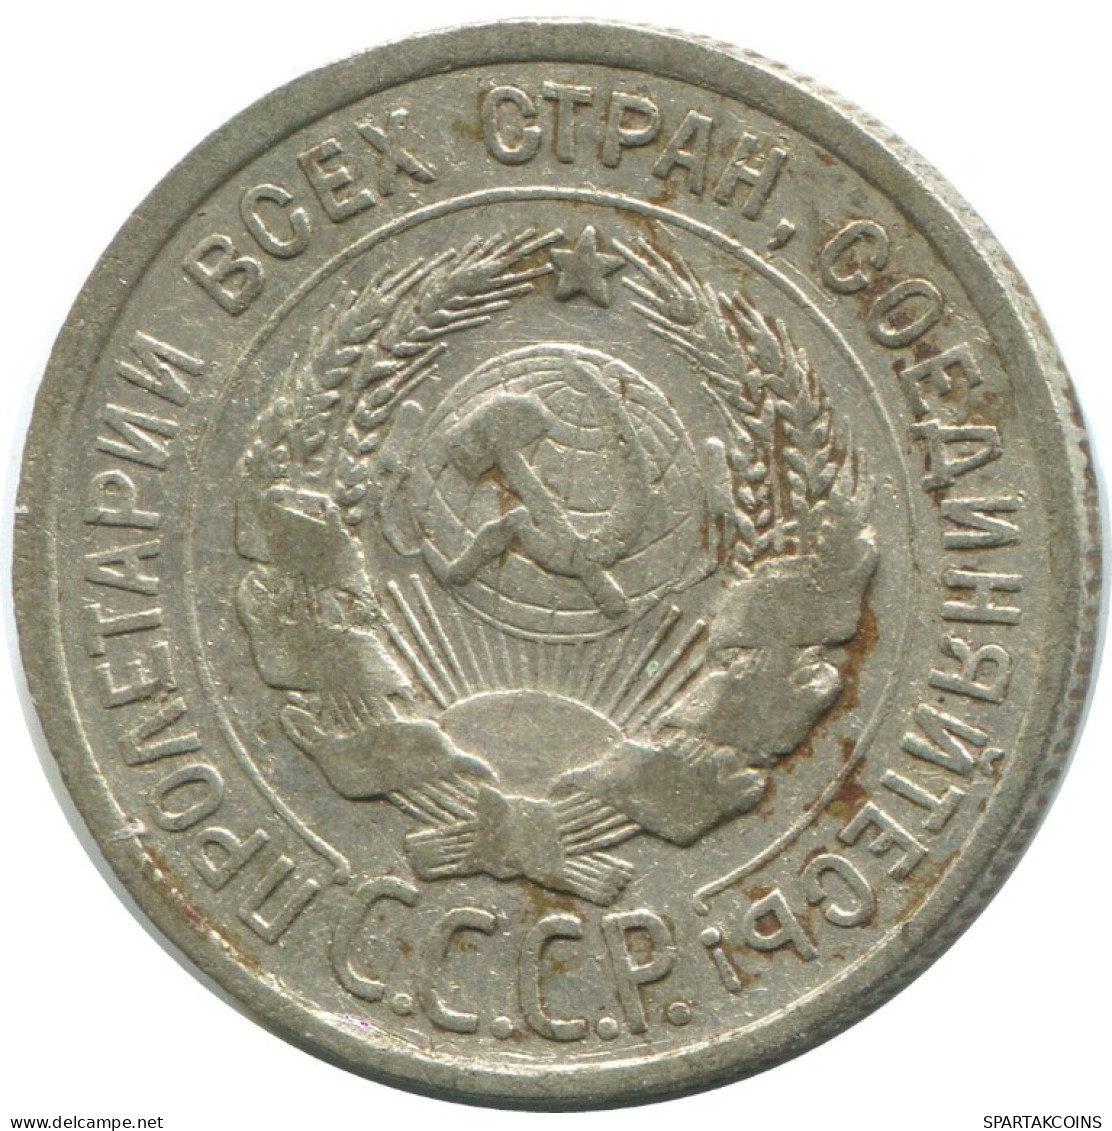 20 KOPEKS 1924 RUSSIA USSR SILVER Coin HIGH GRADE #AF277.4.U.A - Russia